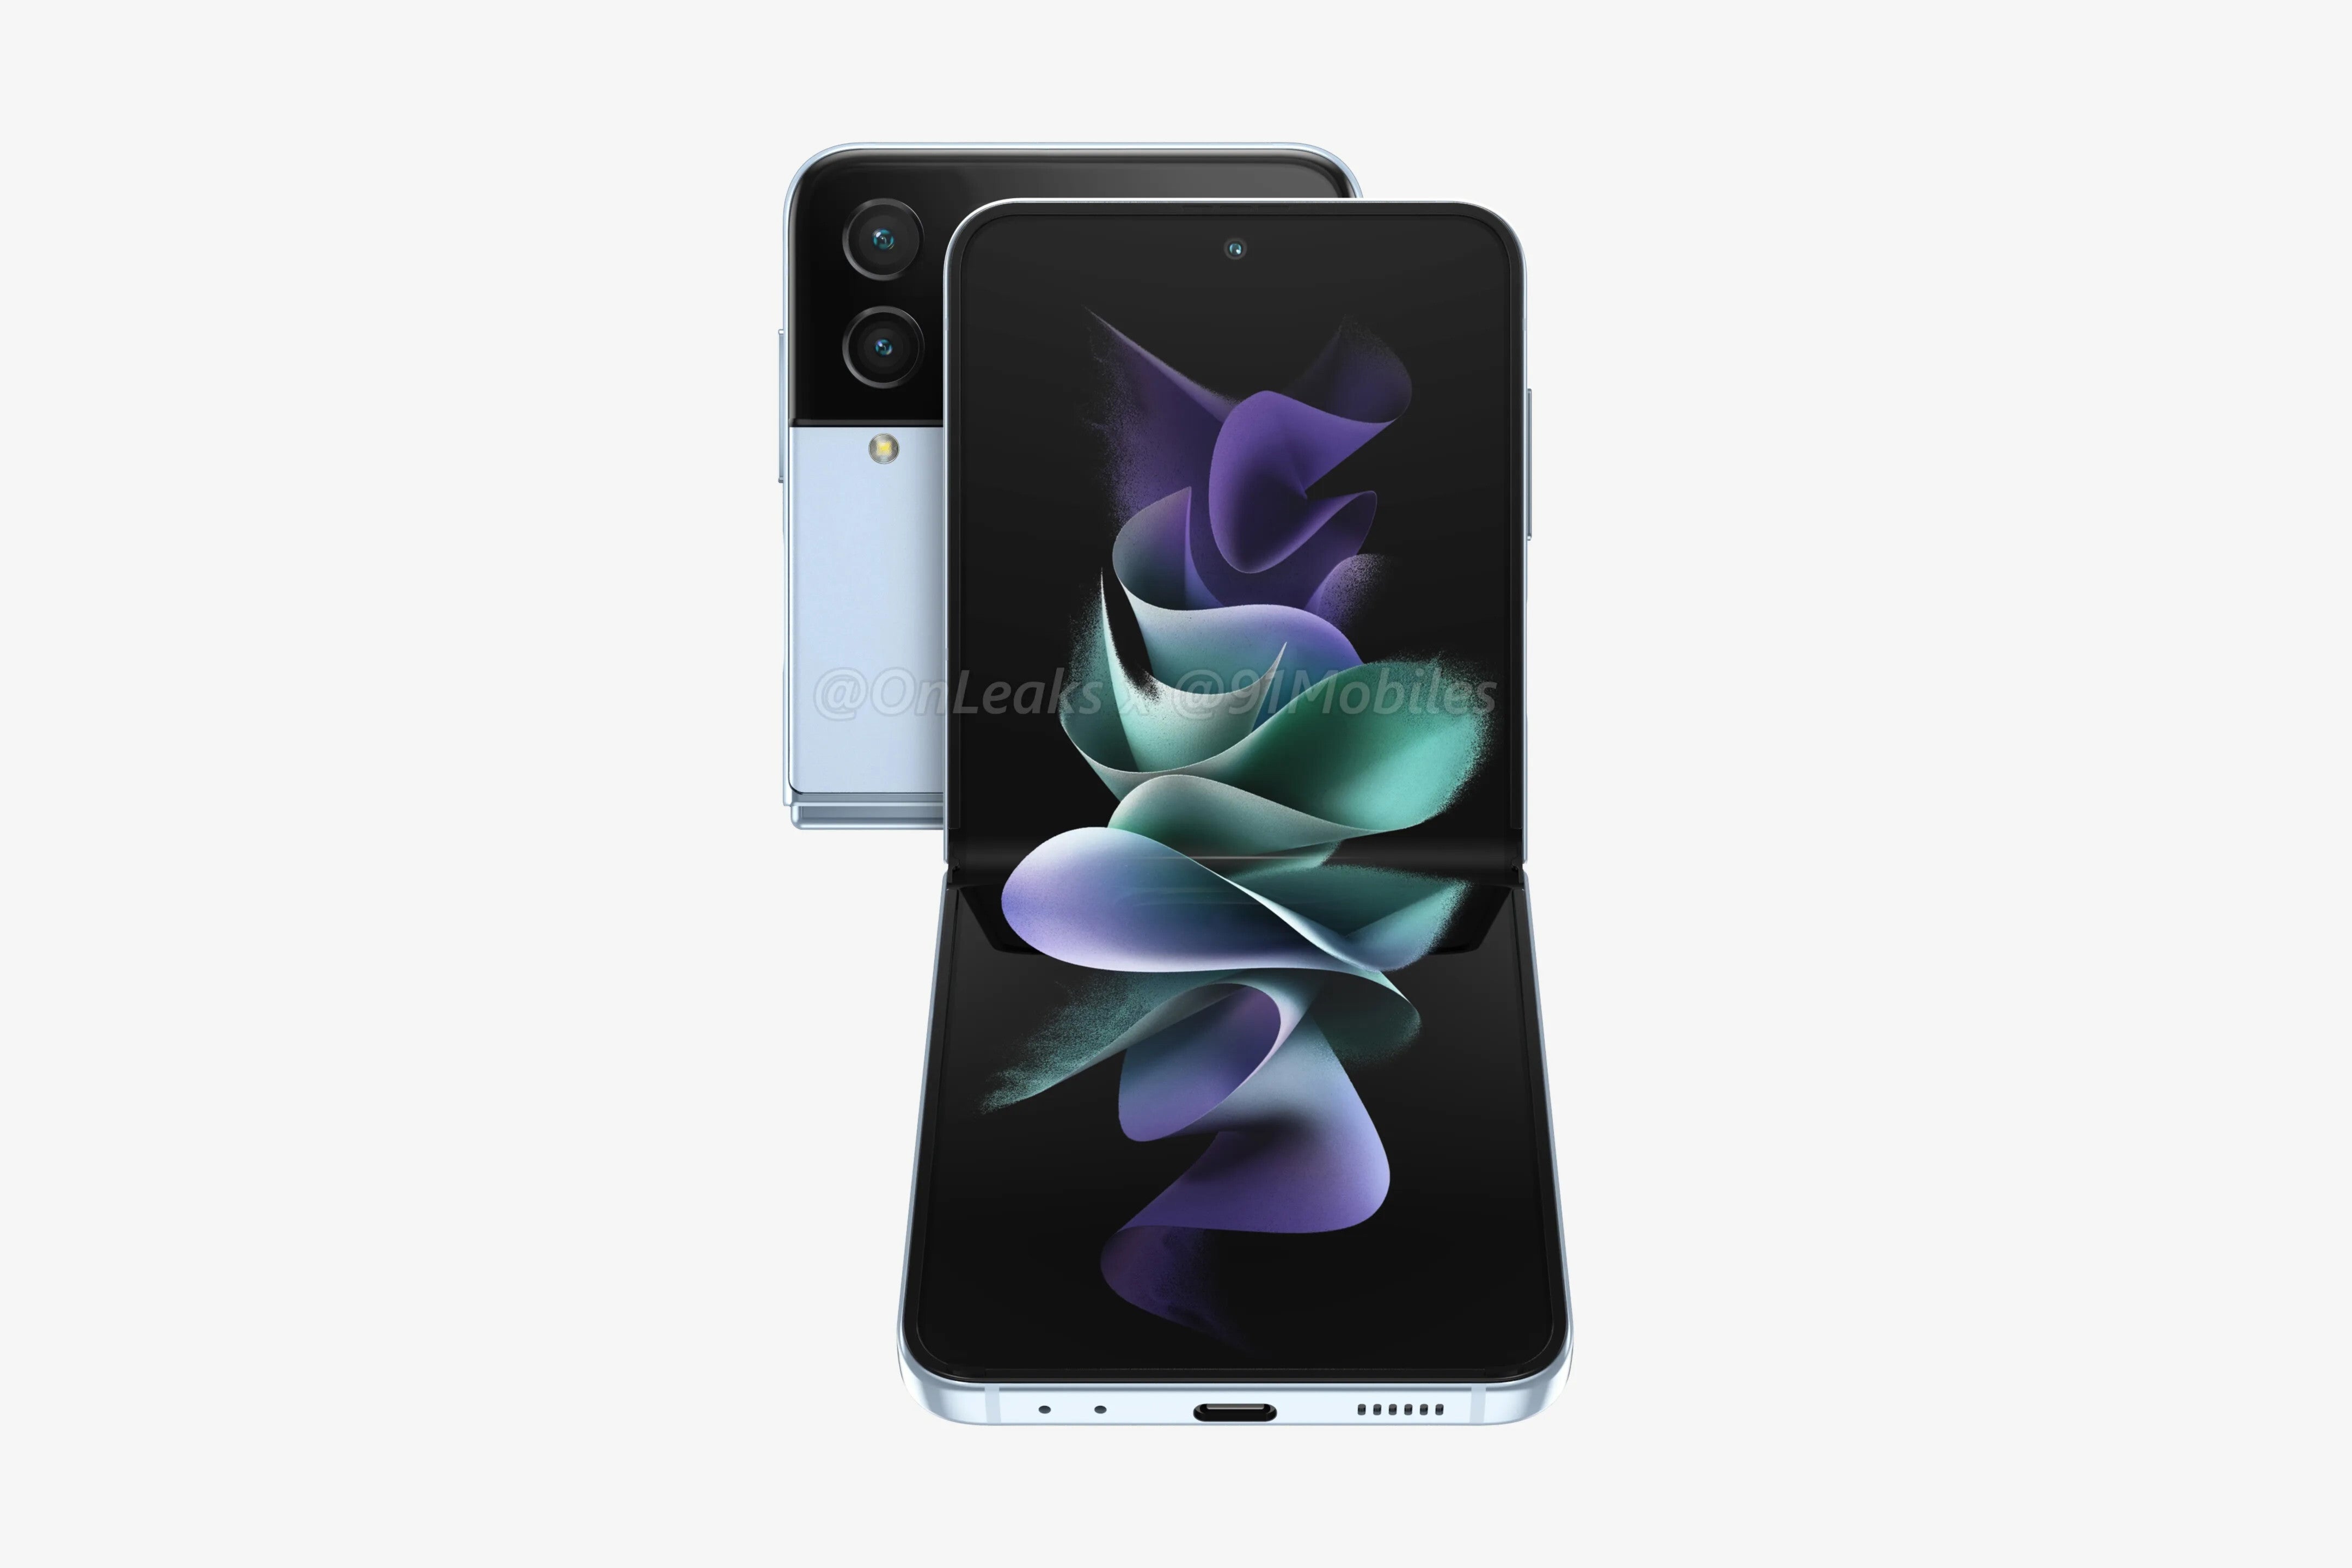 Huge Samsung Galaxy Z Flip 4 leak shows off a very familiar design